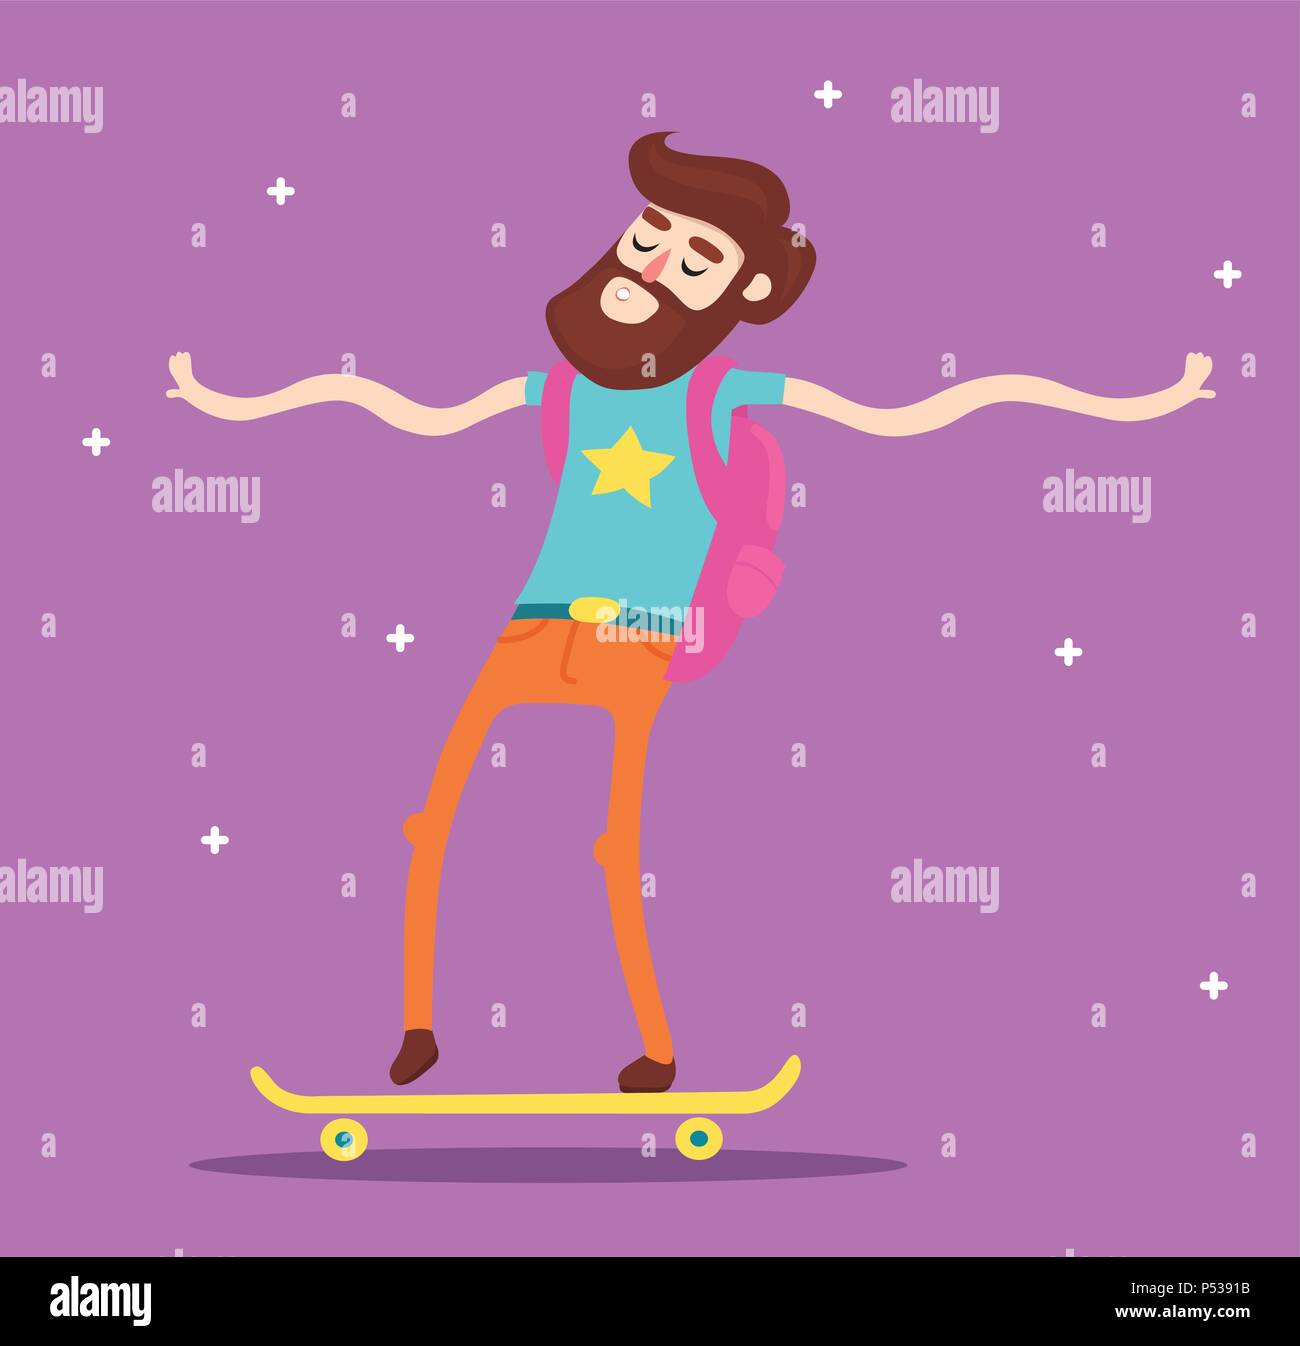 Vector hipster man character with beard riding longboard skateboard. Stock Vector